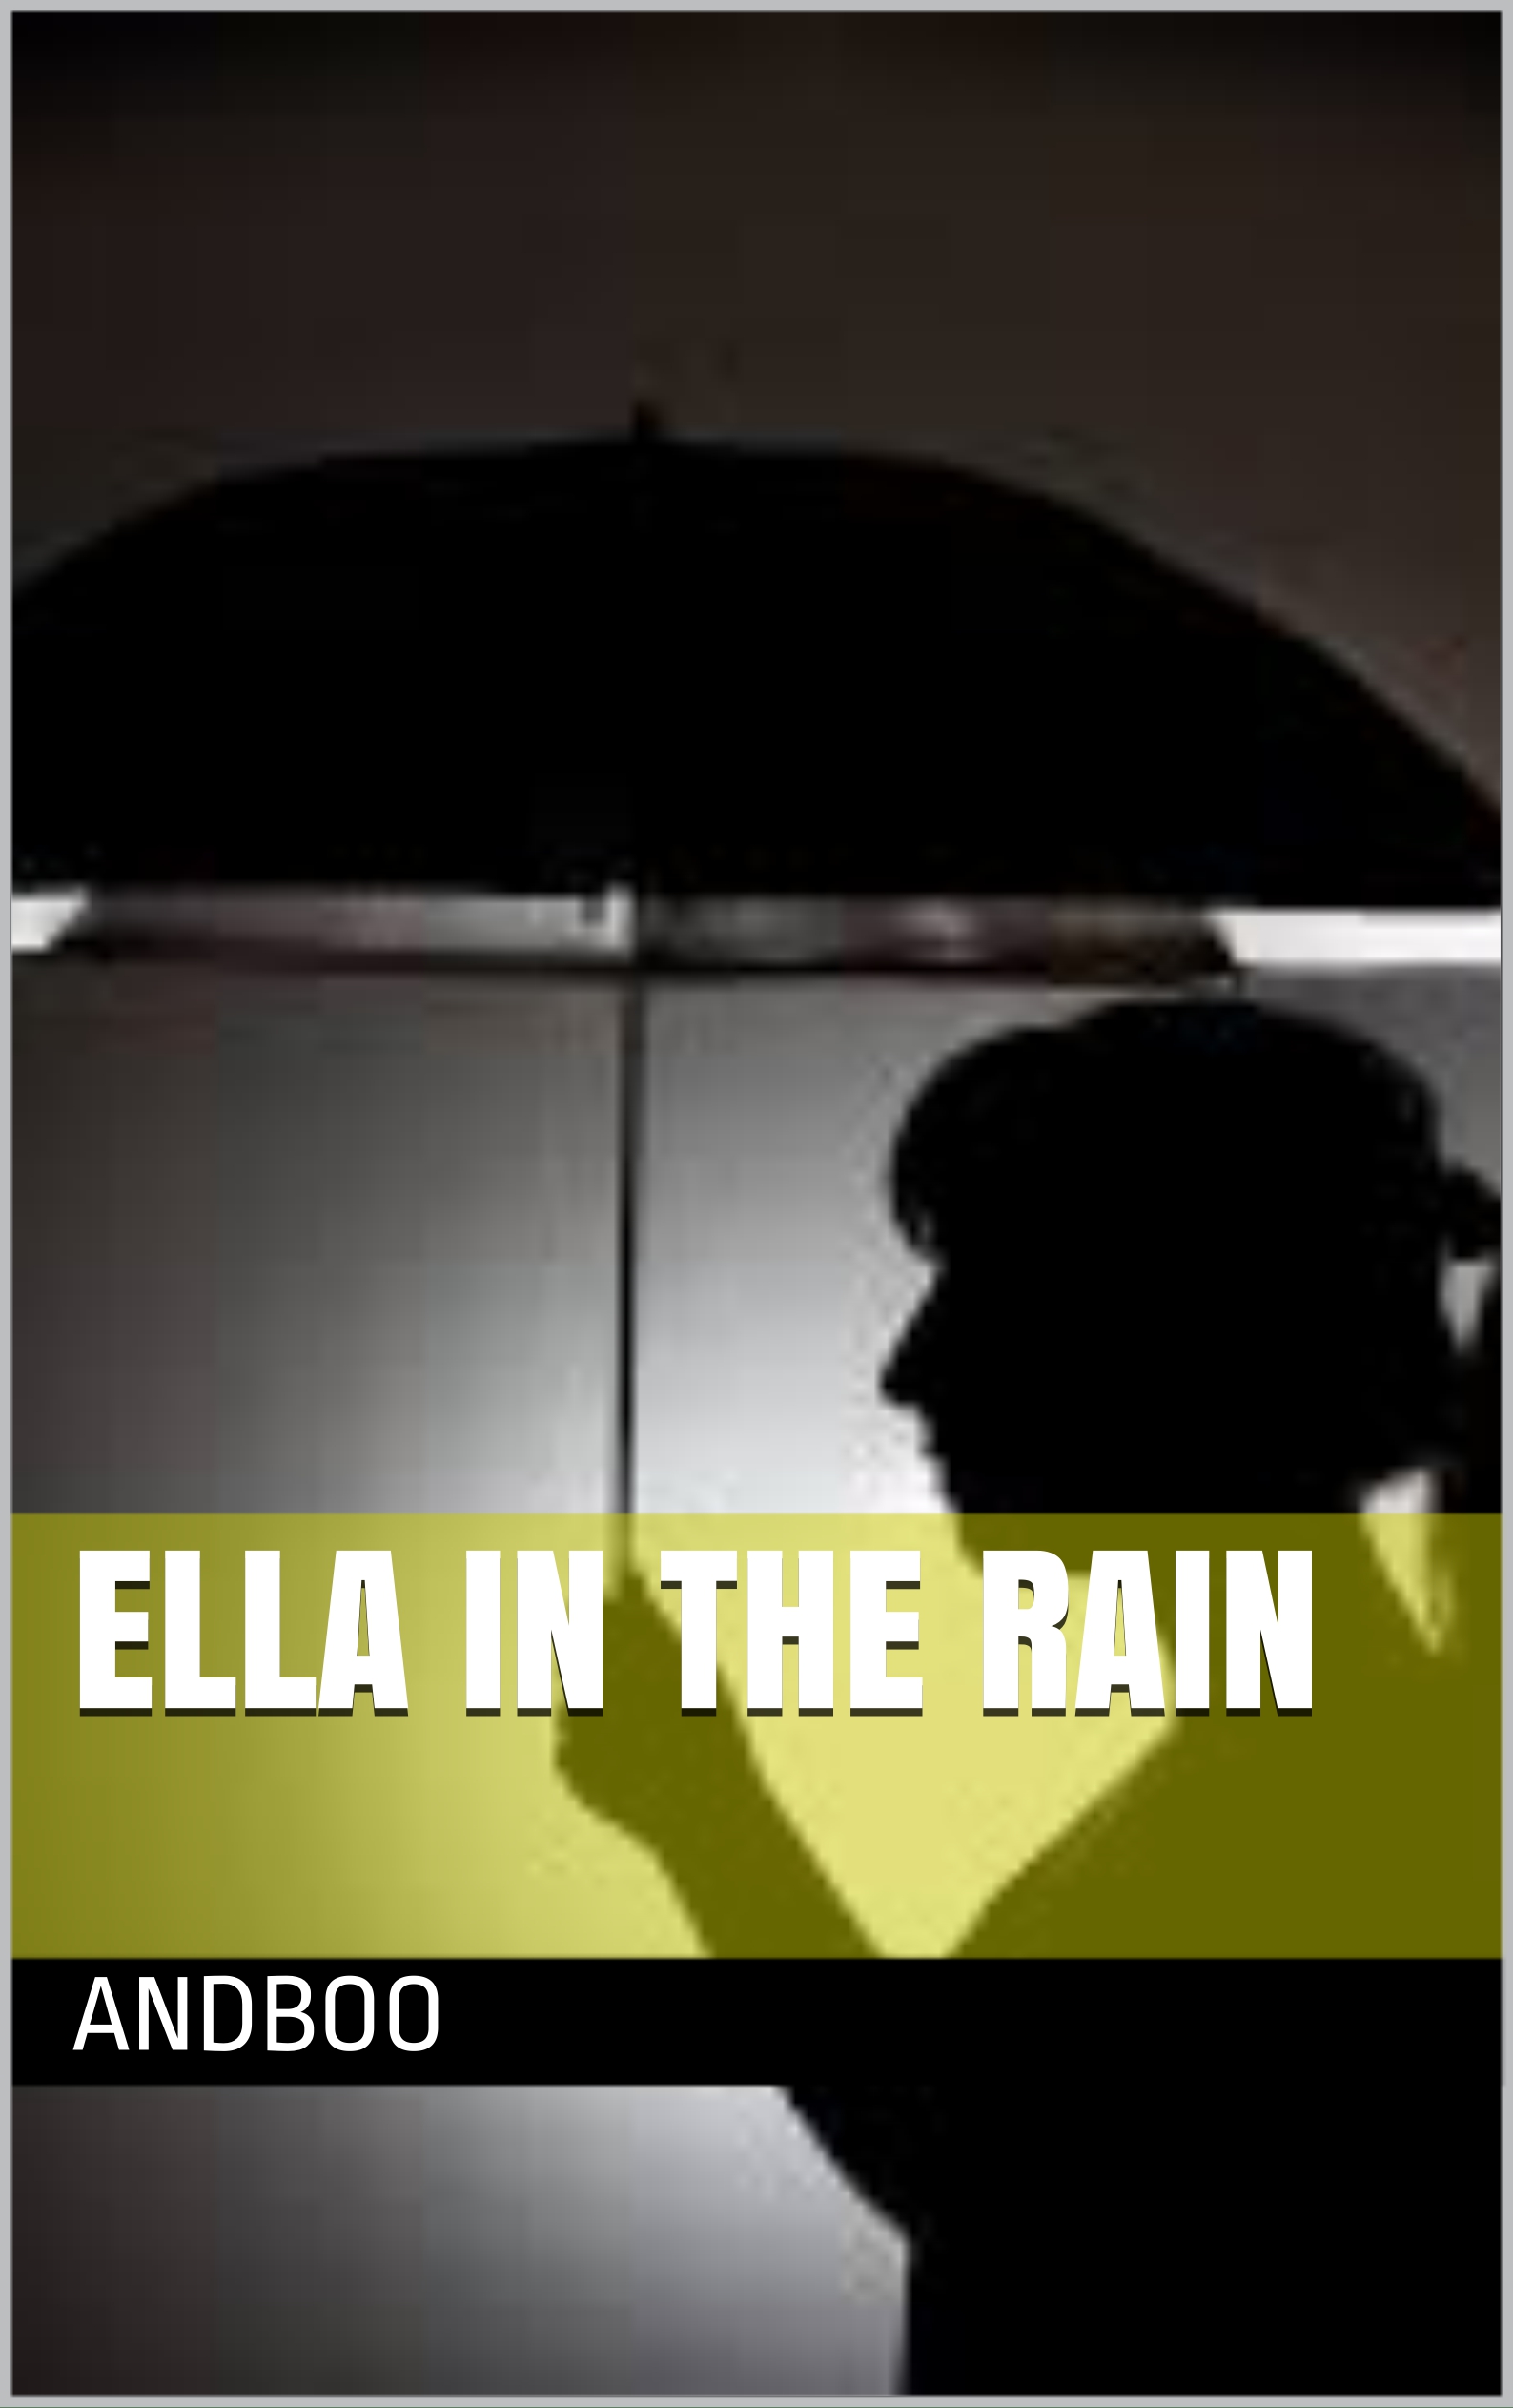 FREE: Ella in the Rain by Andboo